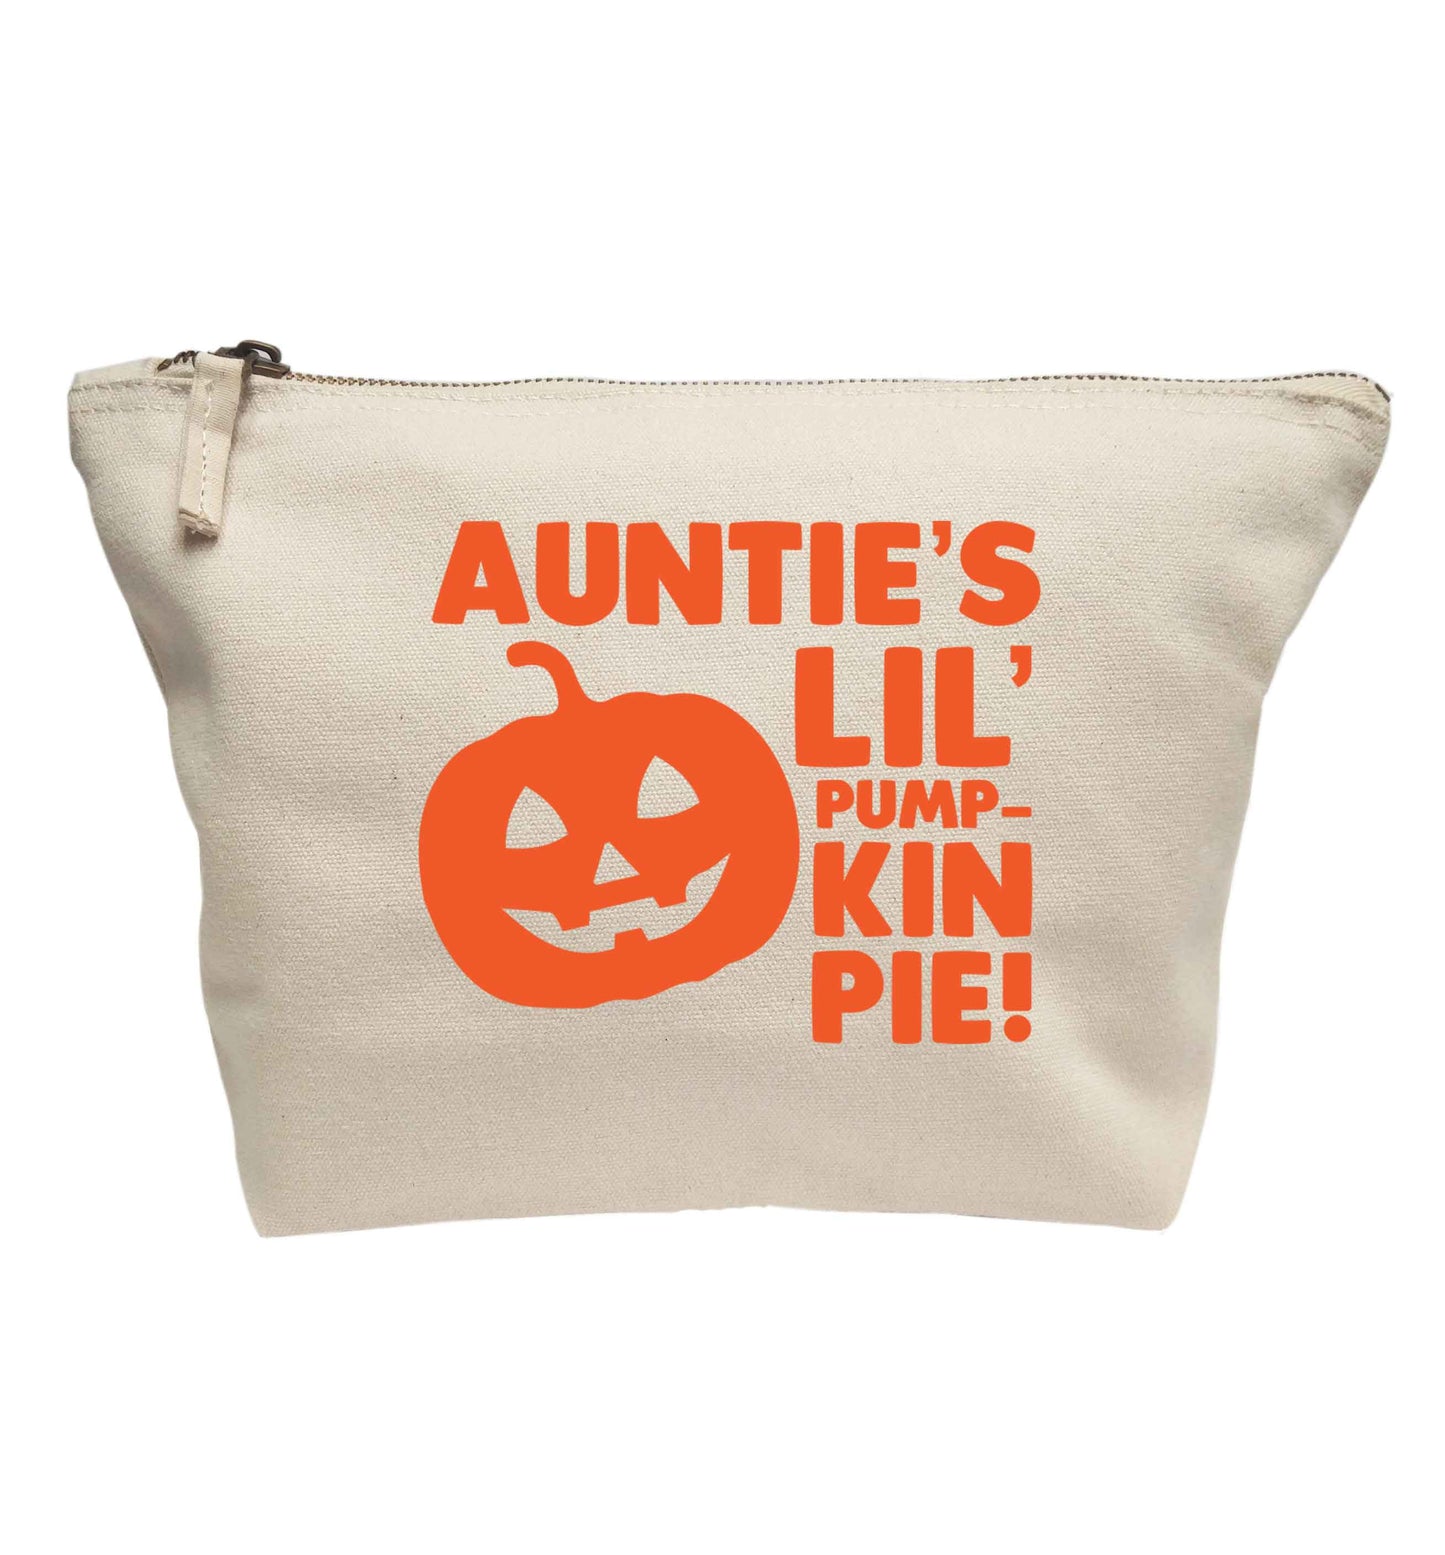 Auntie's lil' pumpkin pie | Makeup / wash bag